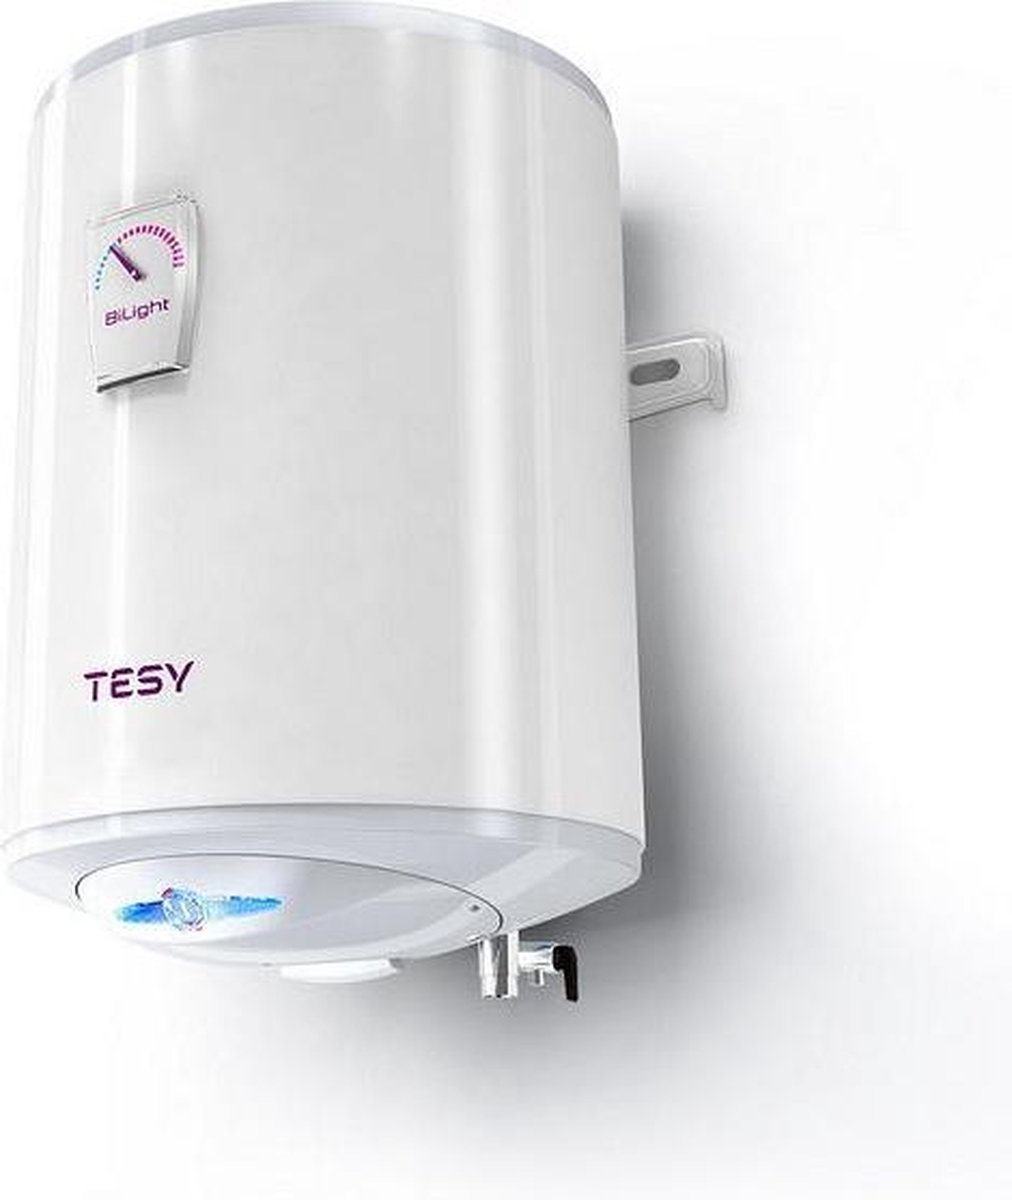 Elektrische boiler 30 liter Bi-Light met extra anode-bescherming 1200 Watt - Tesy